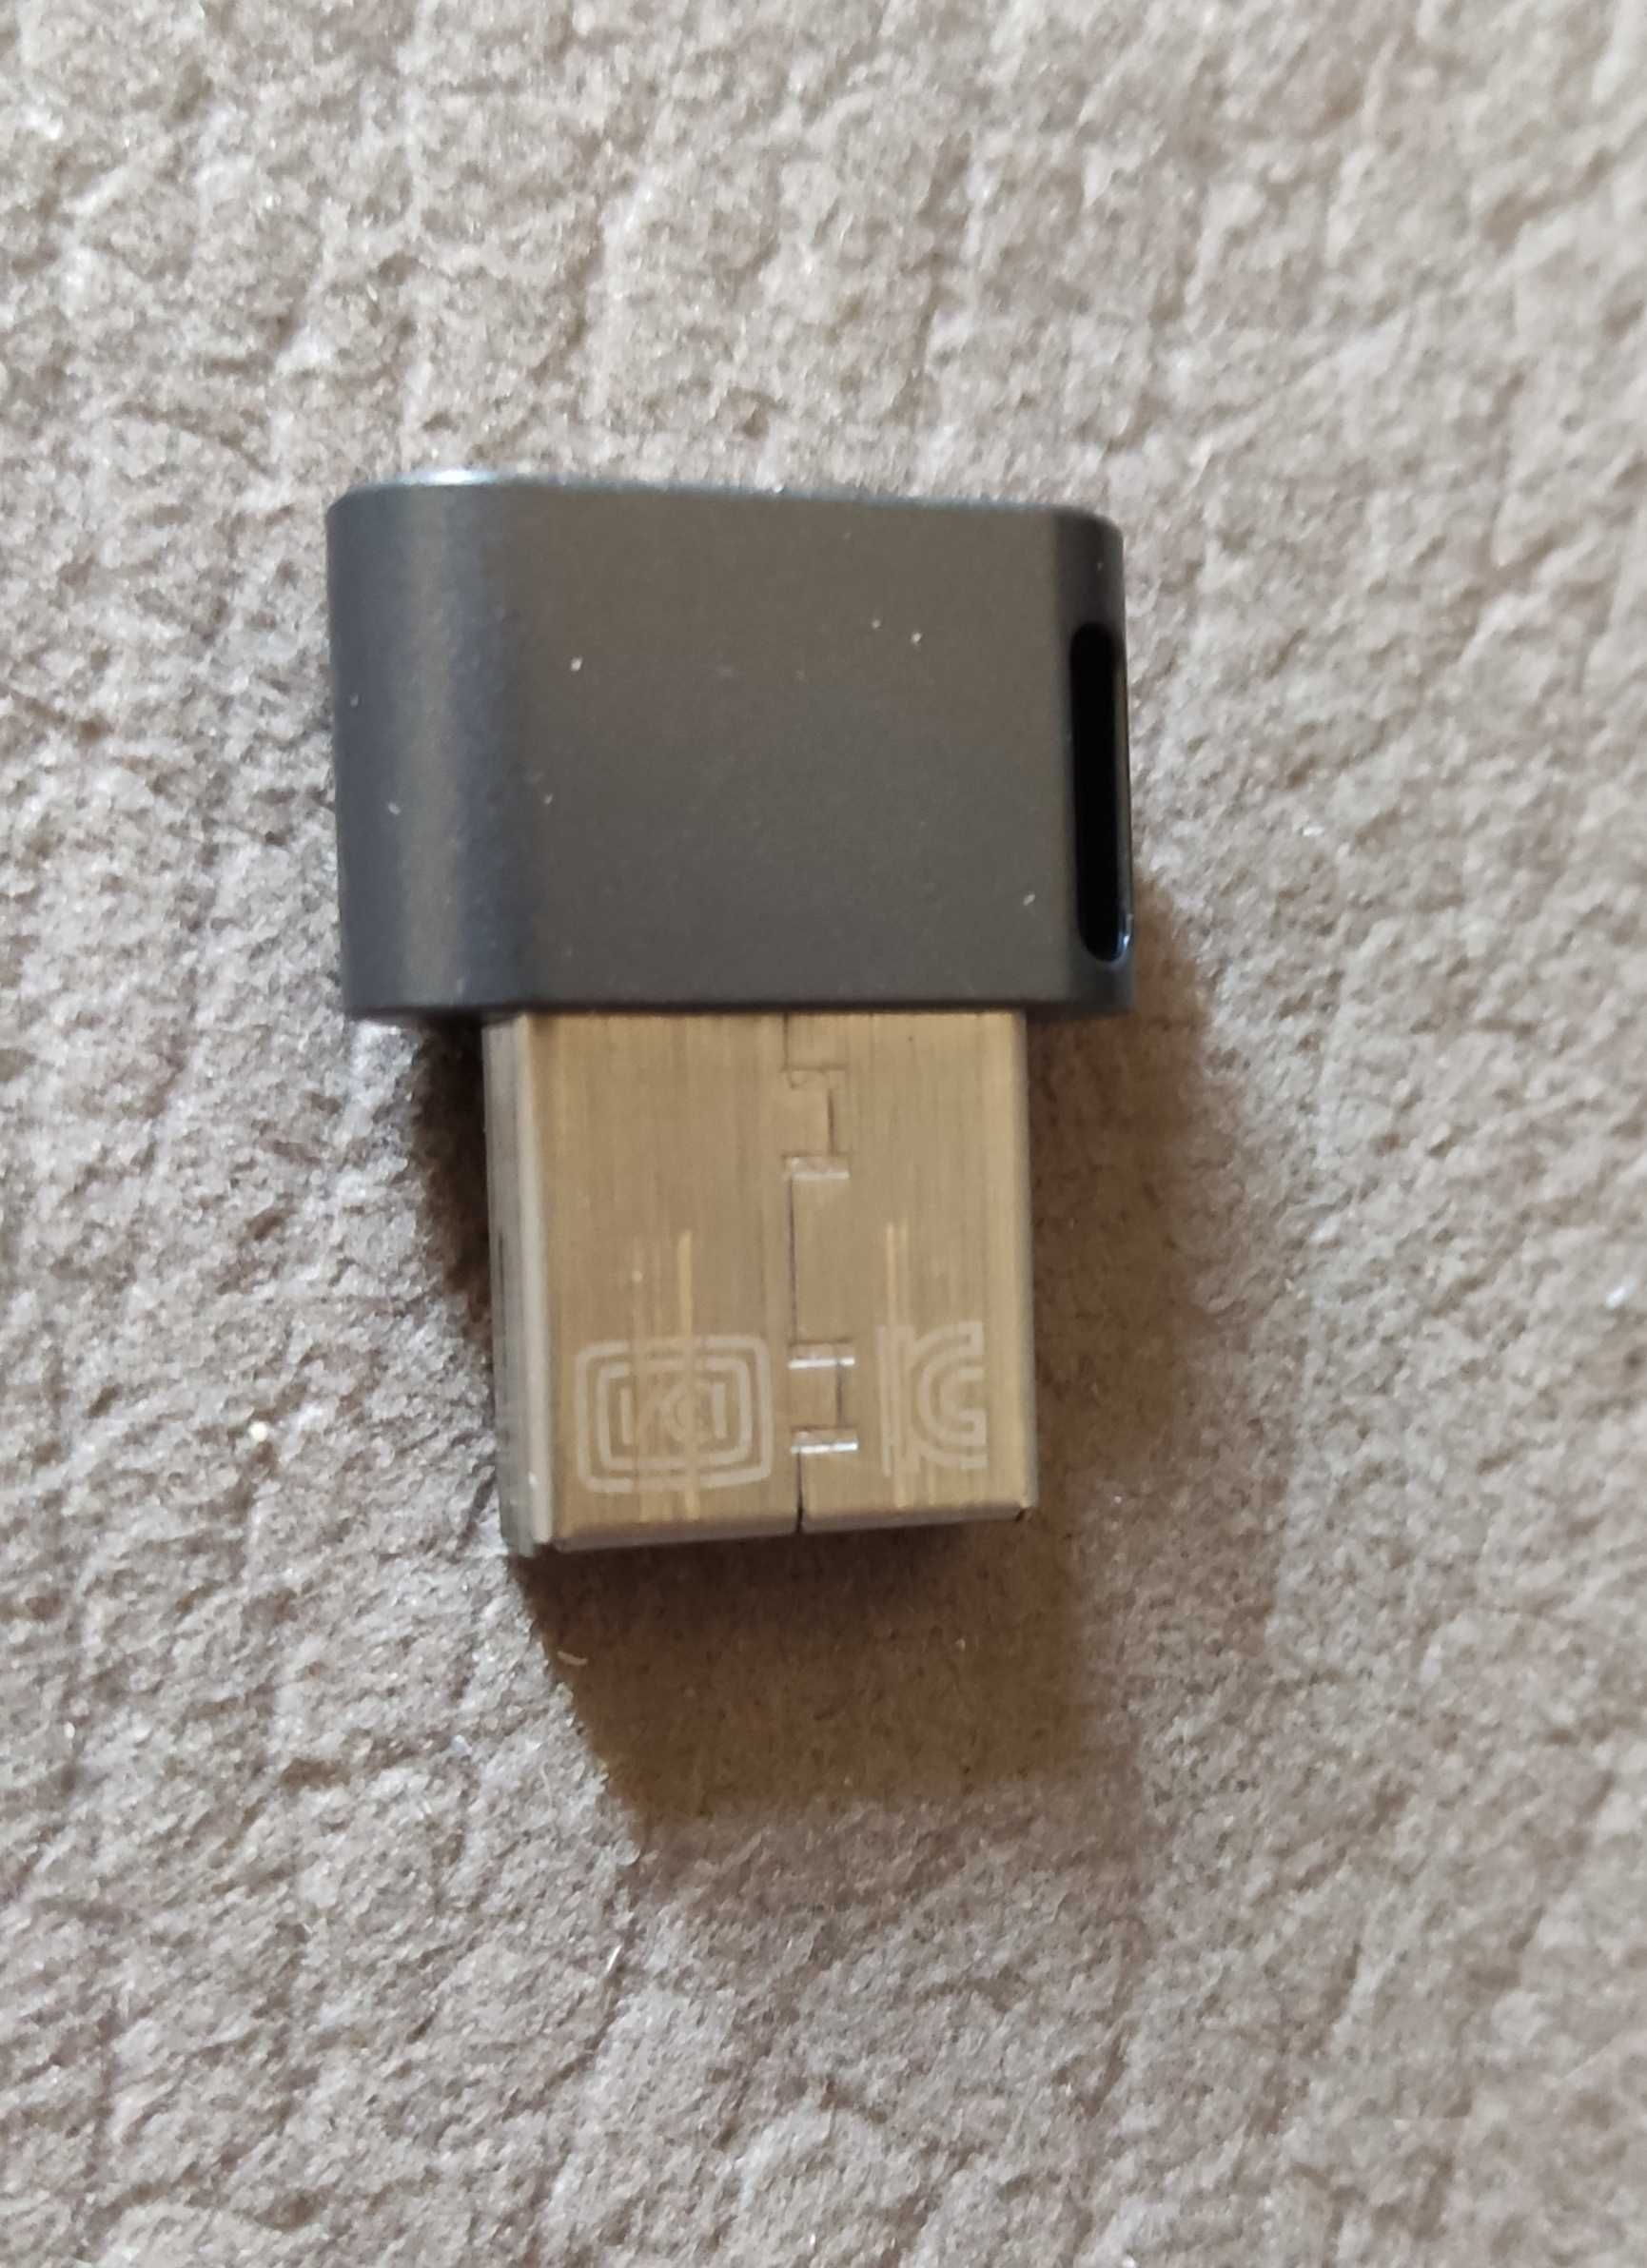 Флешка память USB Samsung Fit Plus USB 3.1 256GB